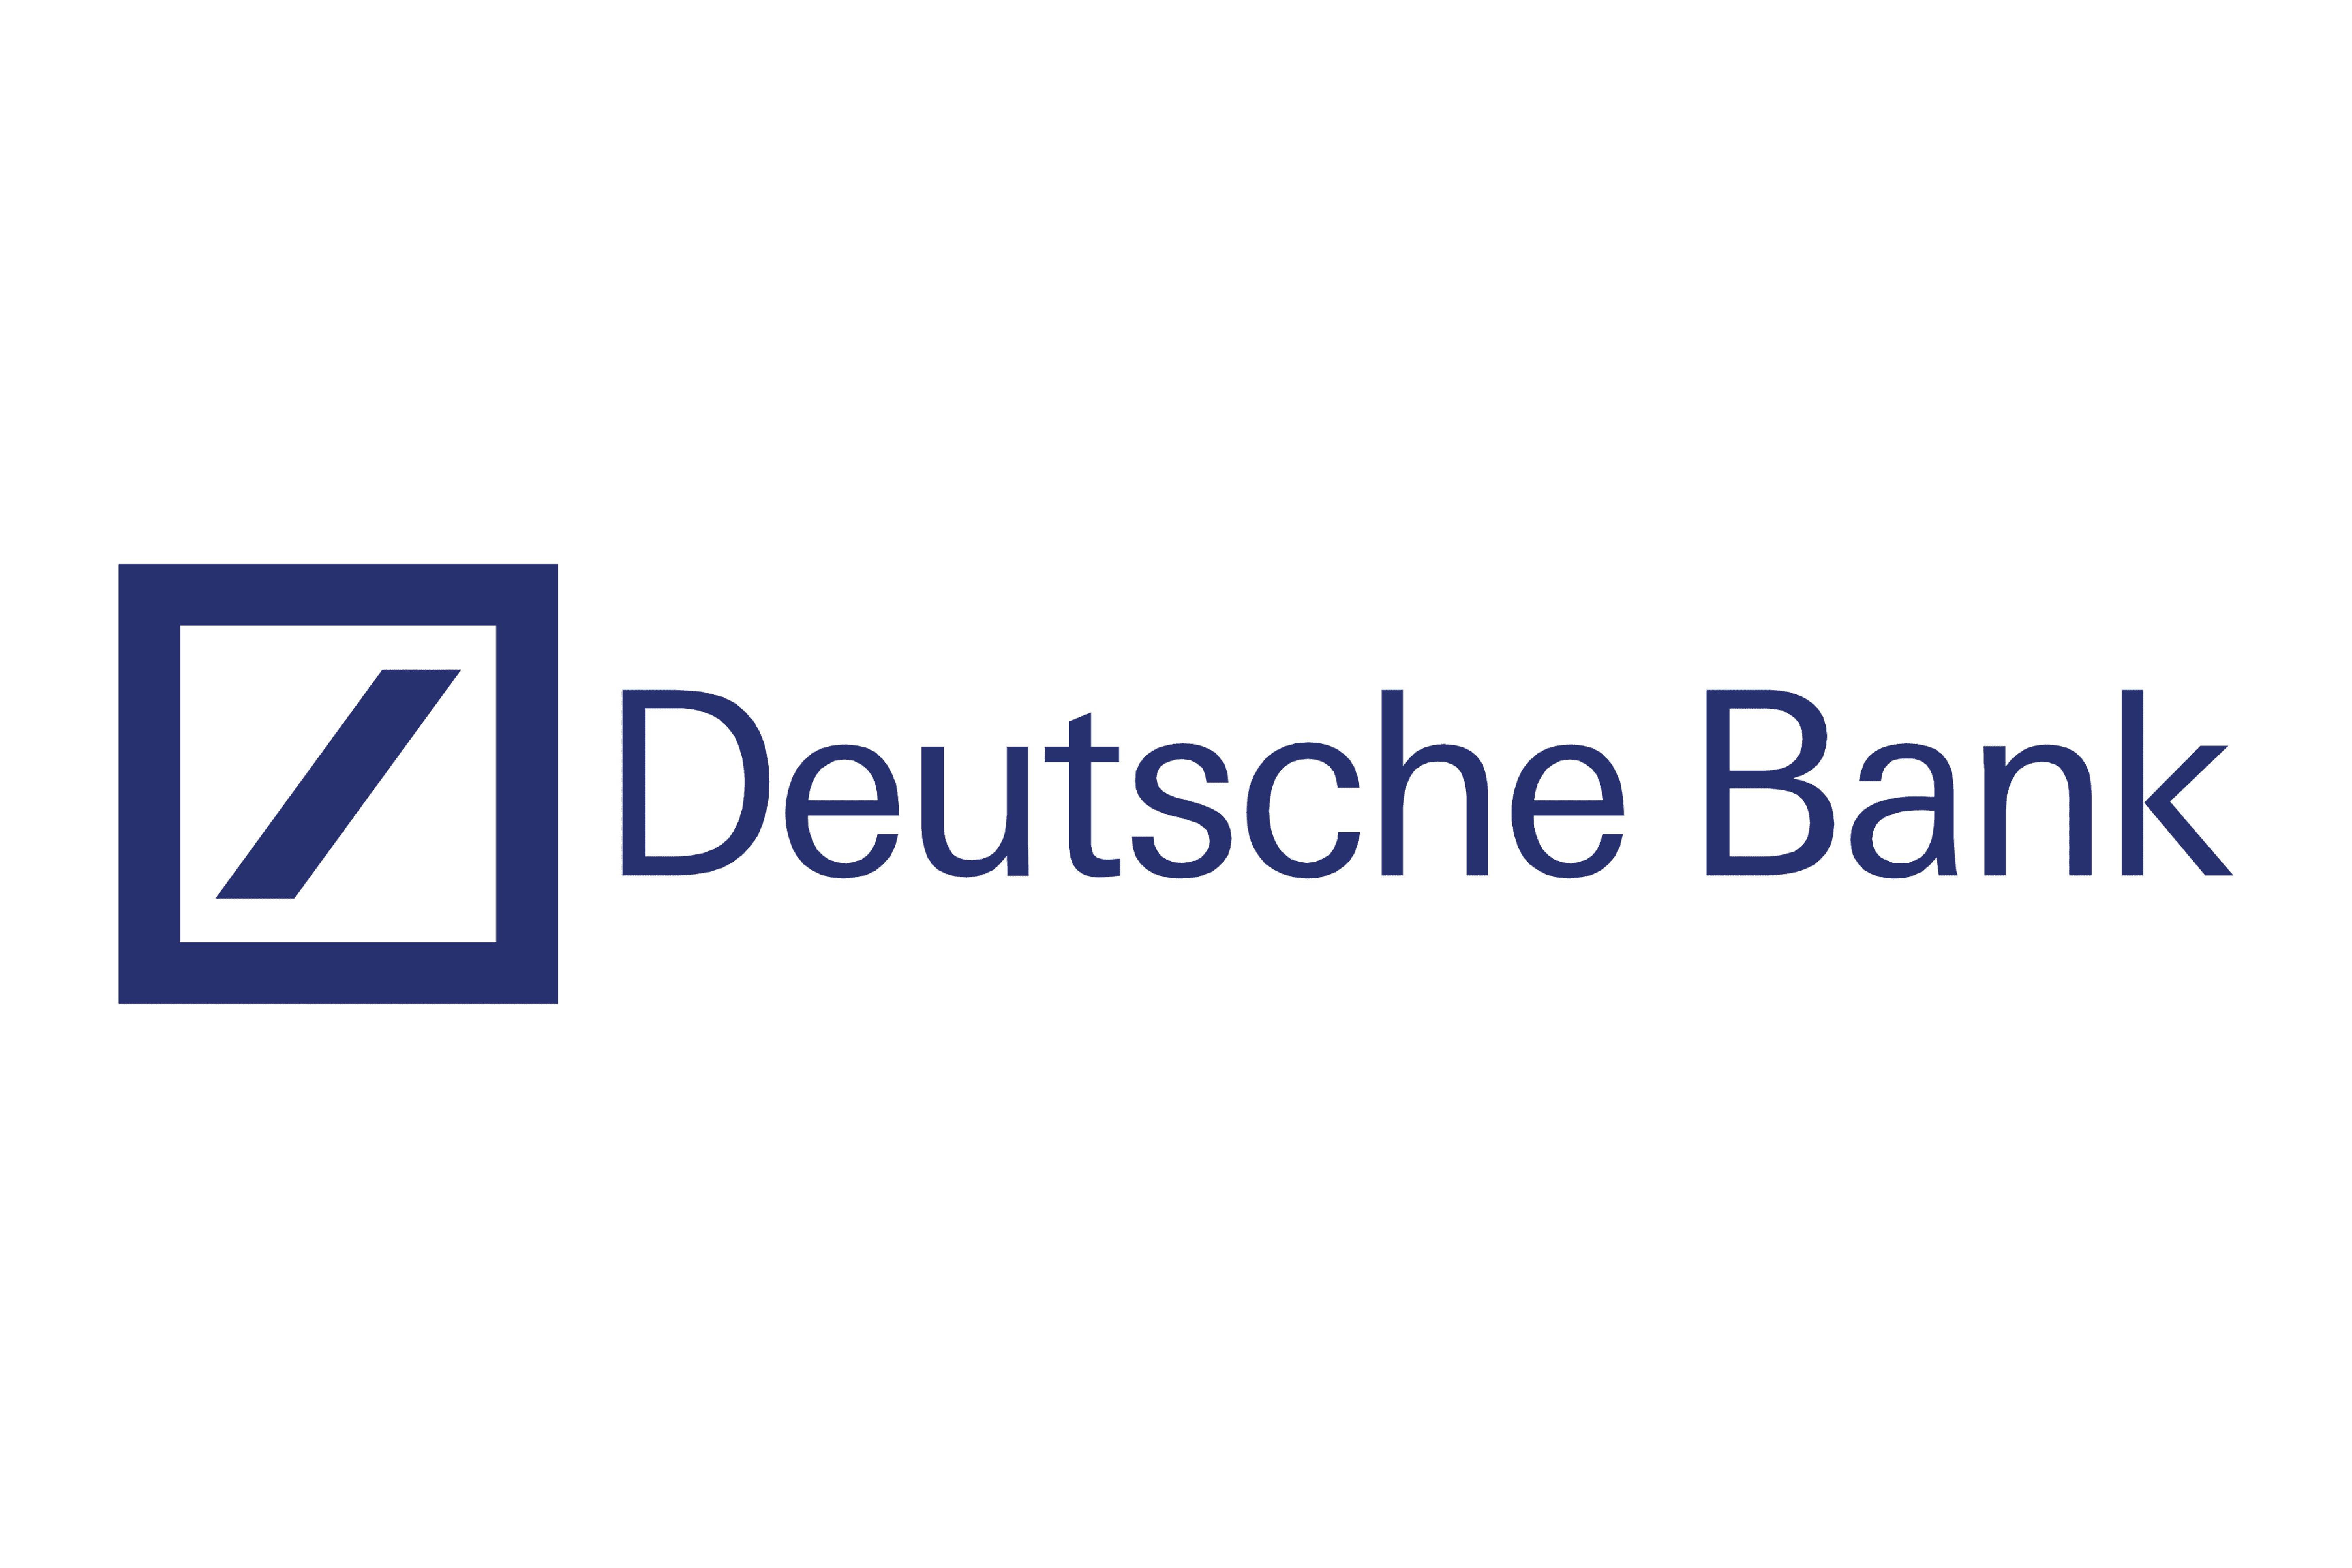 Deutsche Bank bank logo